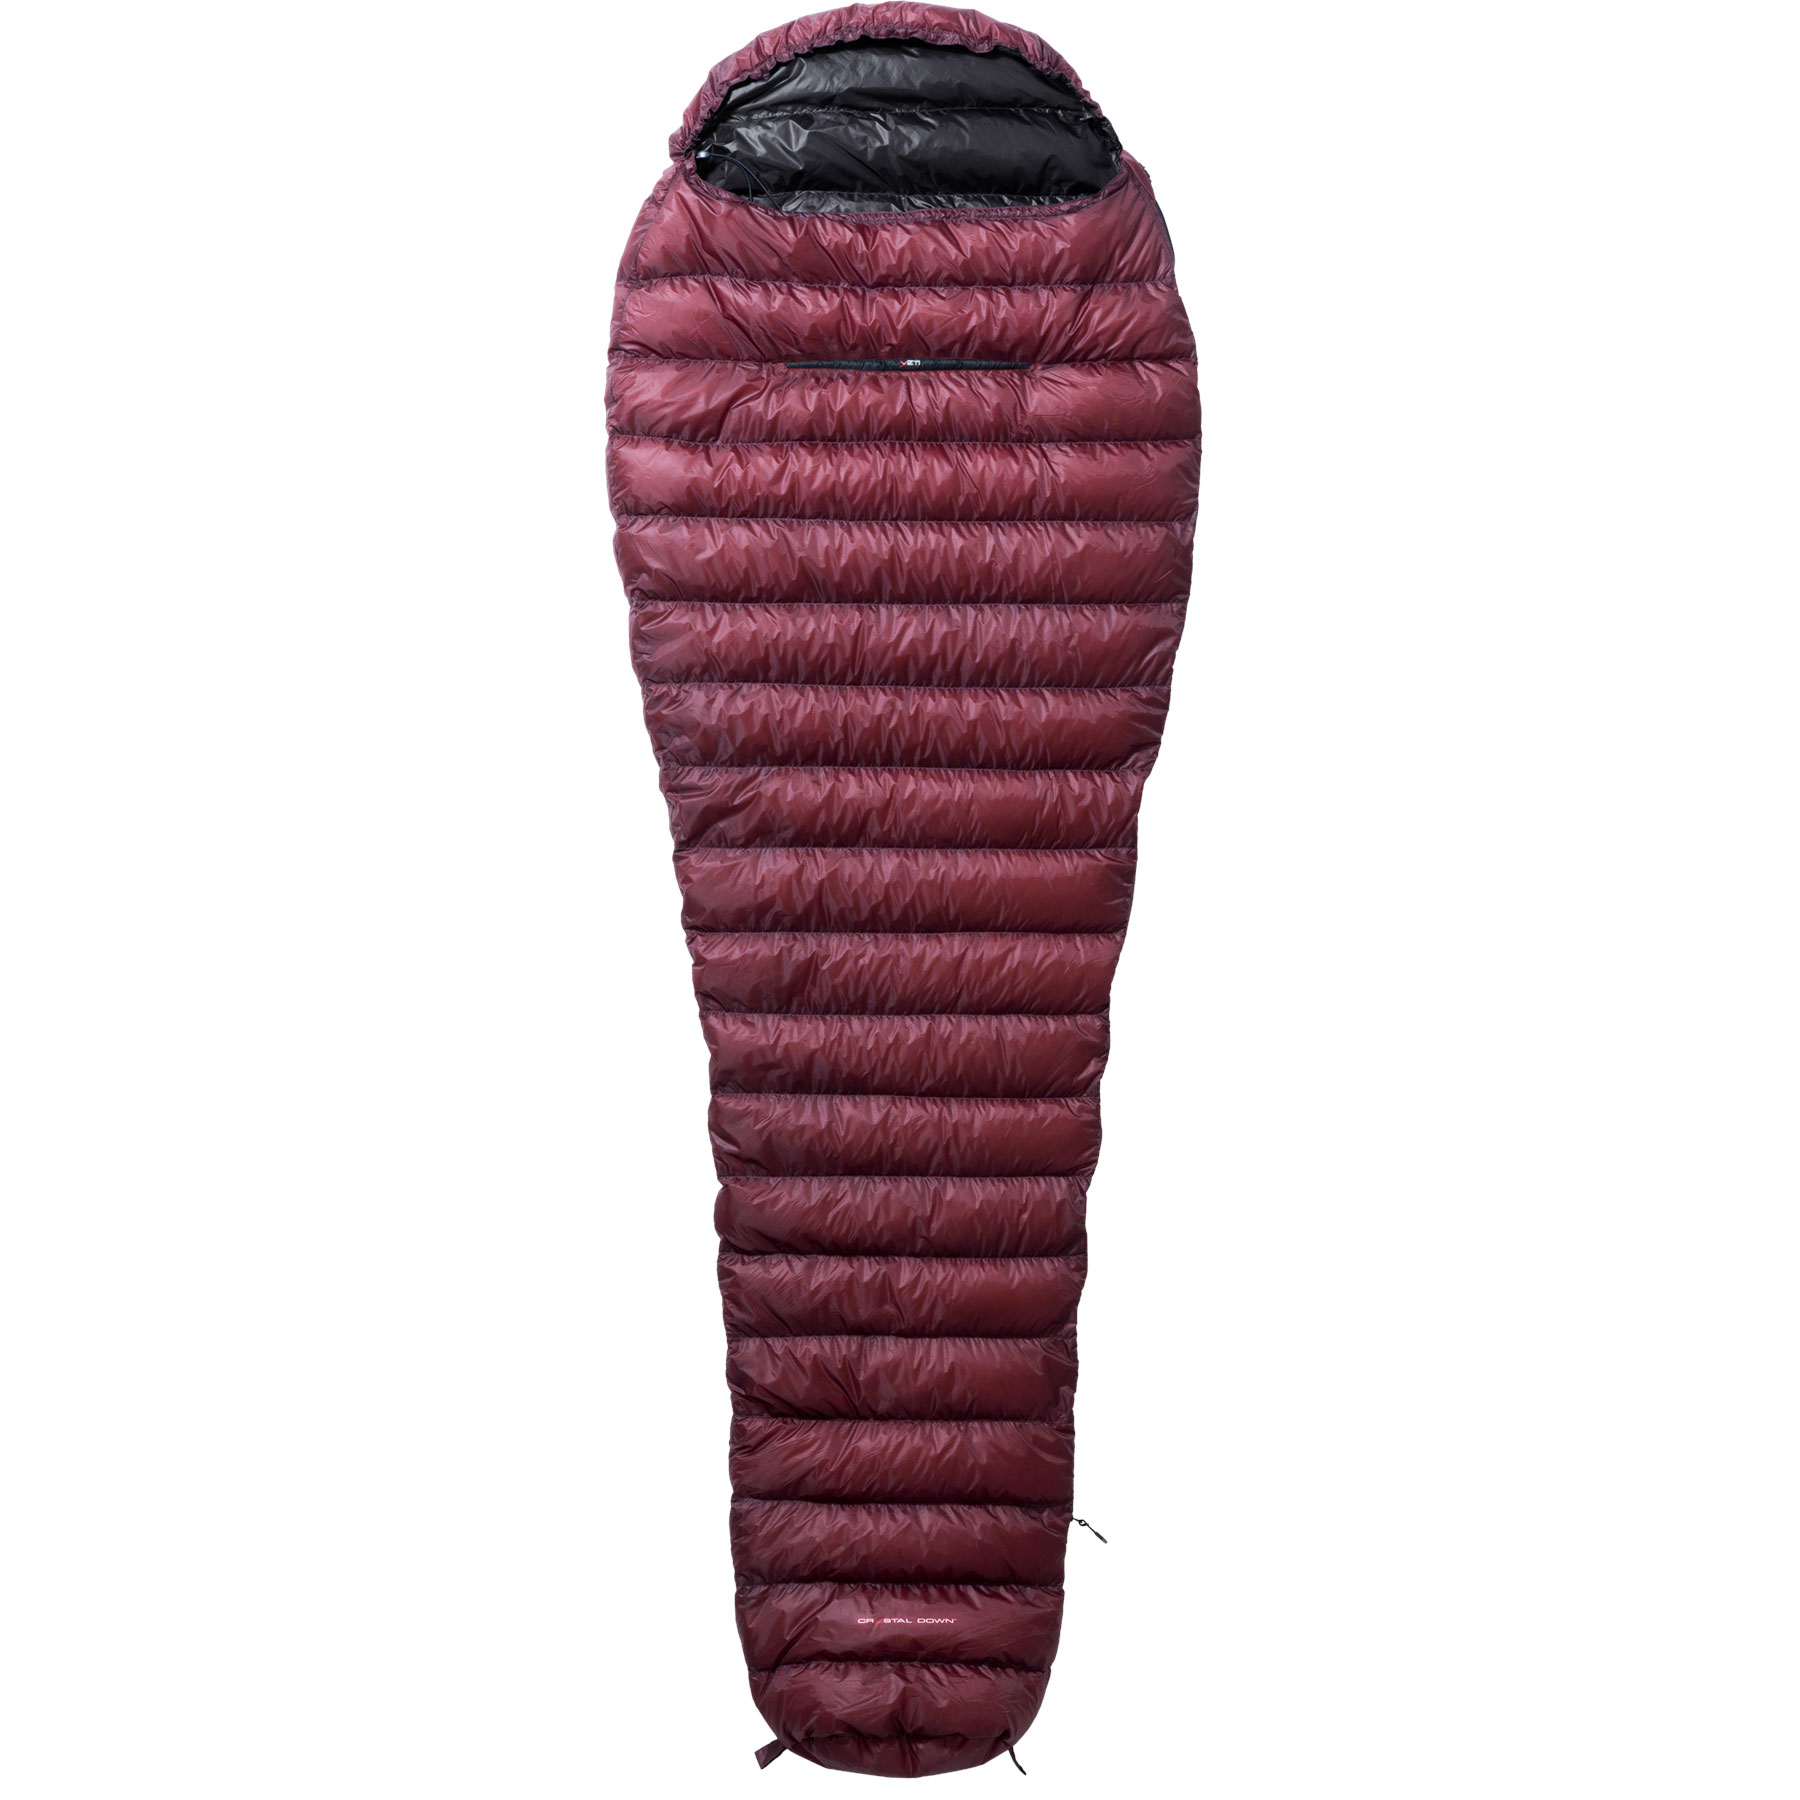 Productfoto van Yeti Fever Ultra Down Sleeping Bag XL - copper/black - zipper left